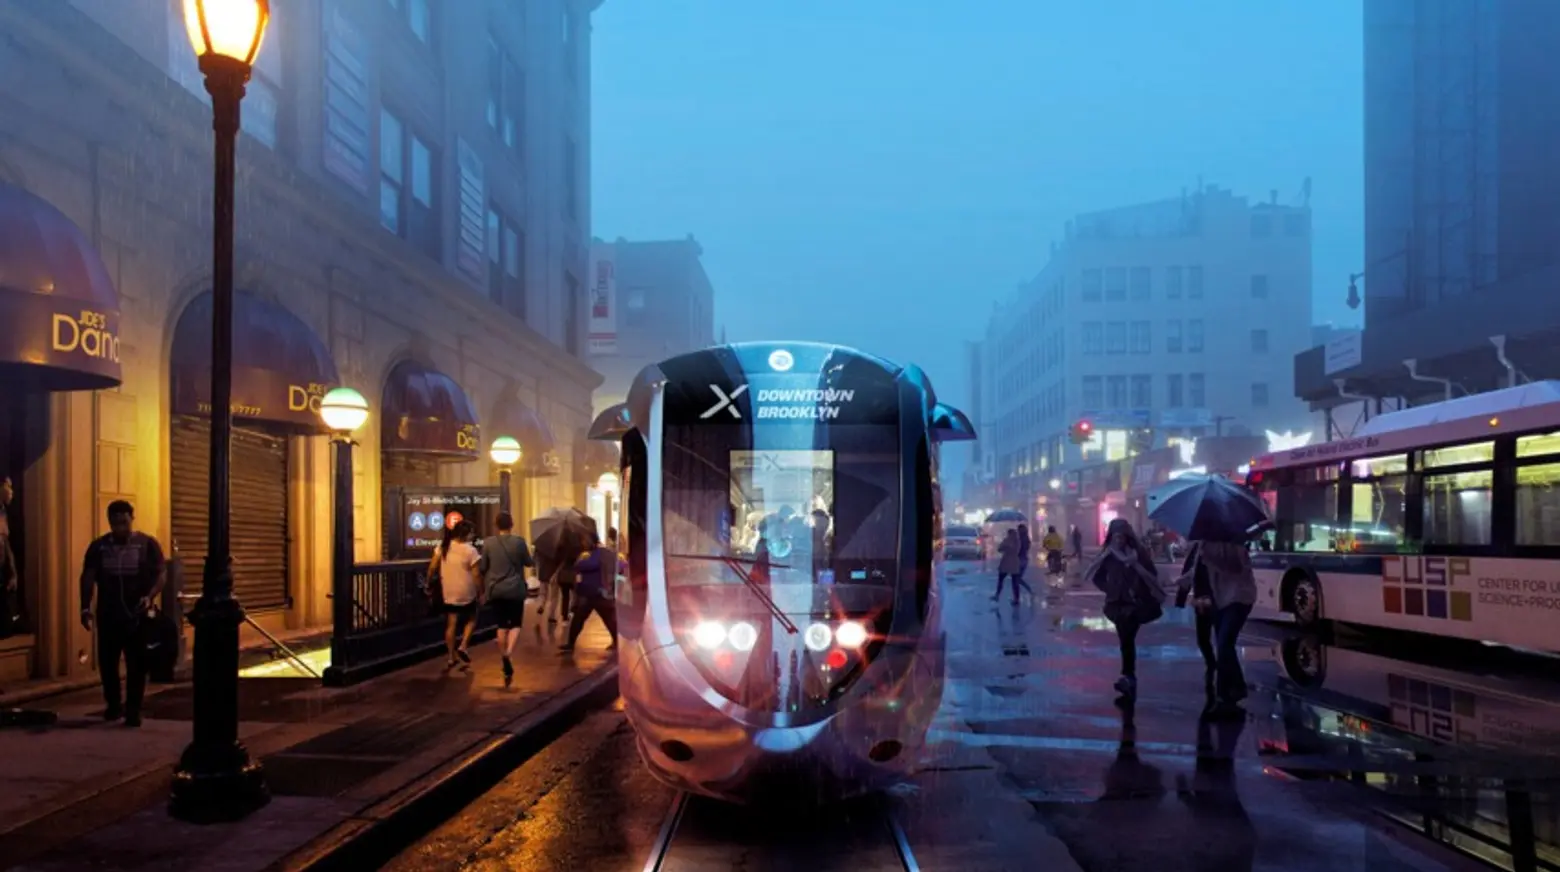 POLL: For $2.5 billion, is the Brooklyn-Queens Streetcar still a good idea?